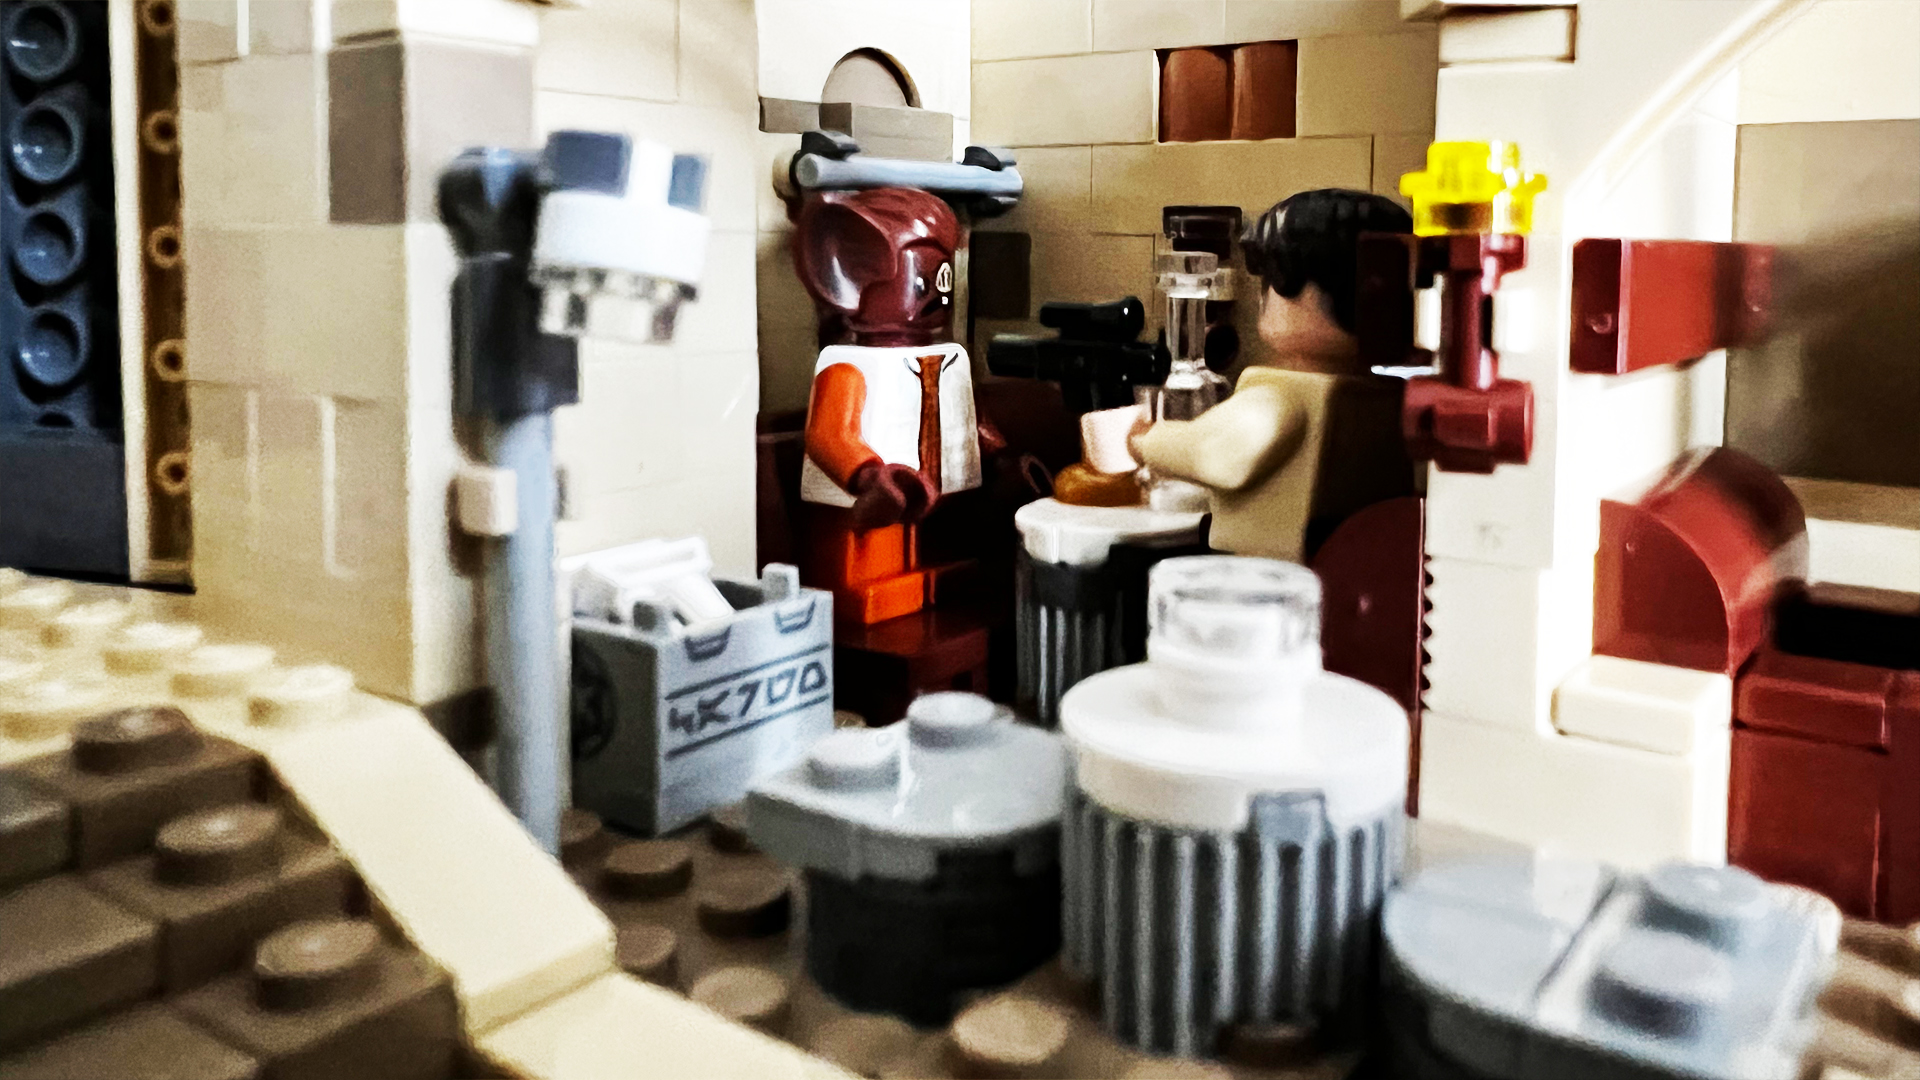 Lego Star Wars Mos Eisley Cantina_bar corner_Jordan Middler